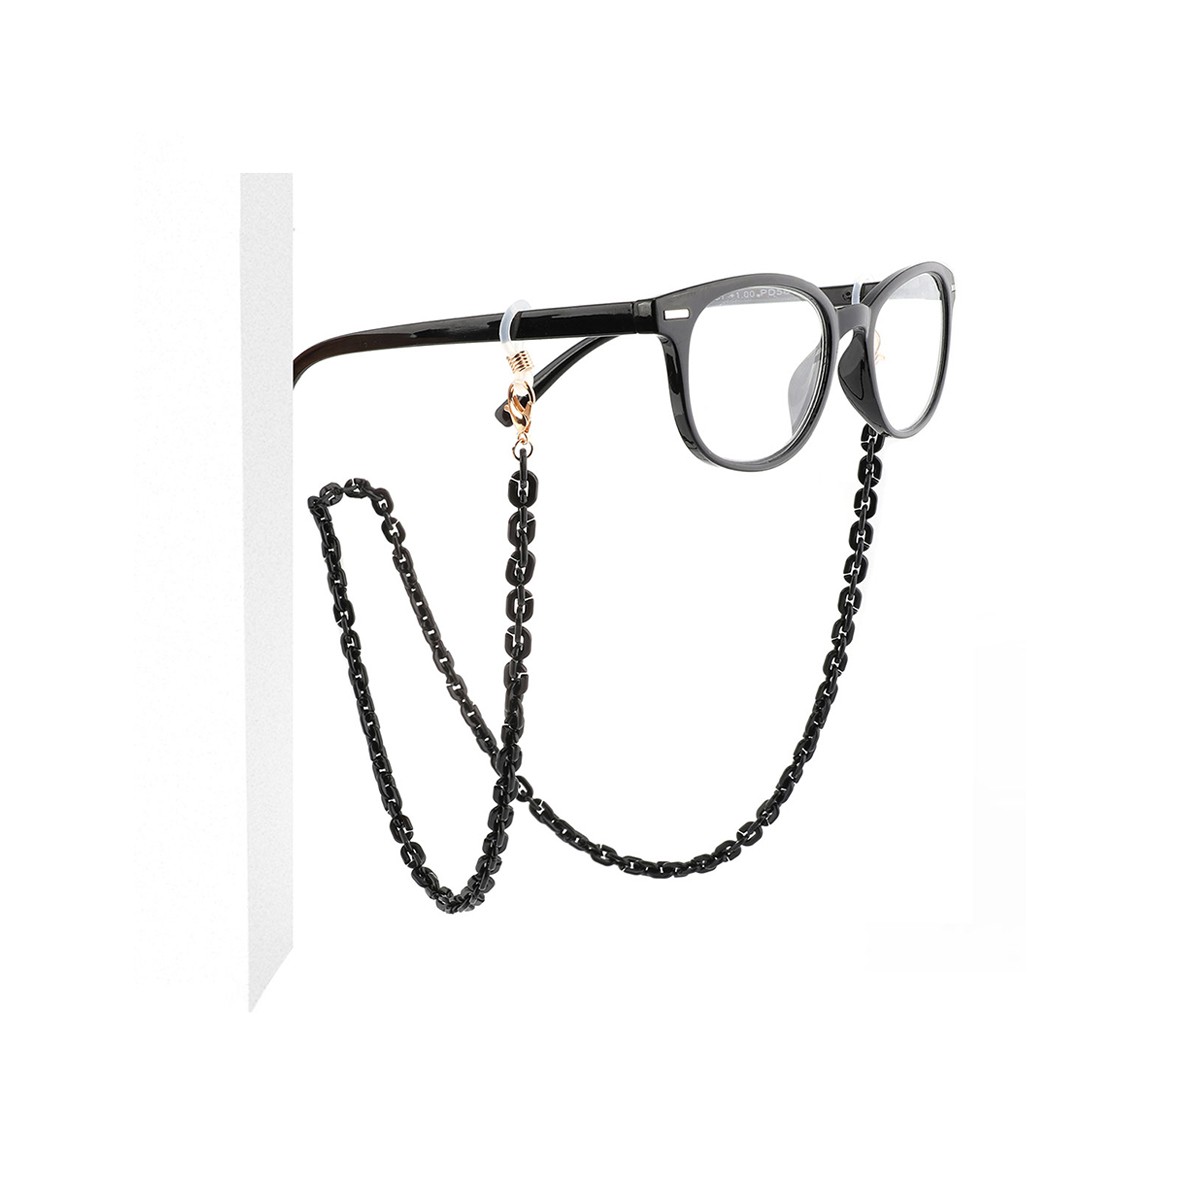 Gentle Eyeglass Chain